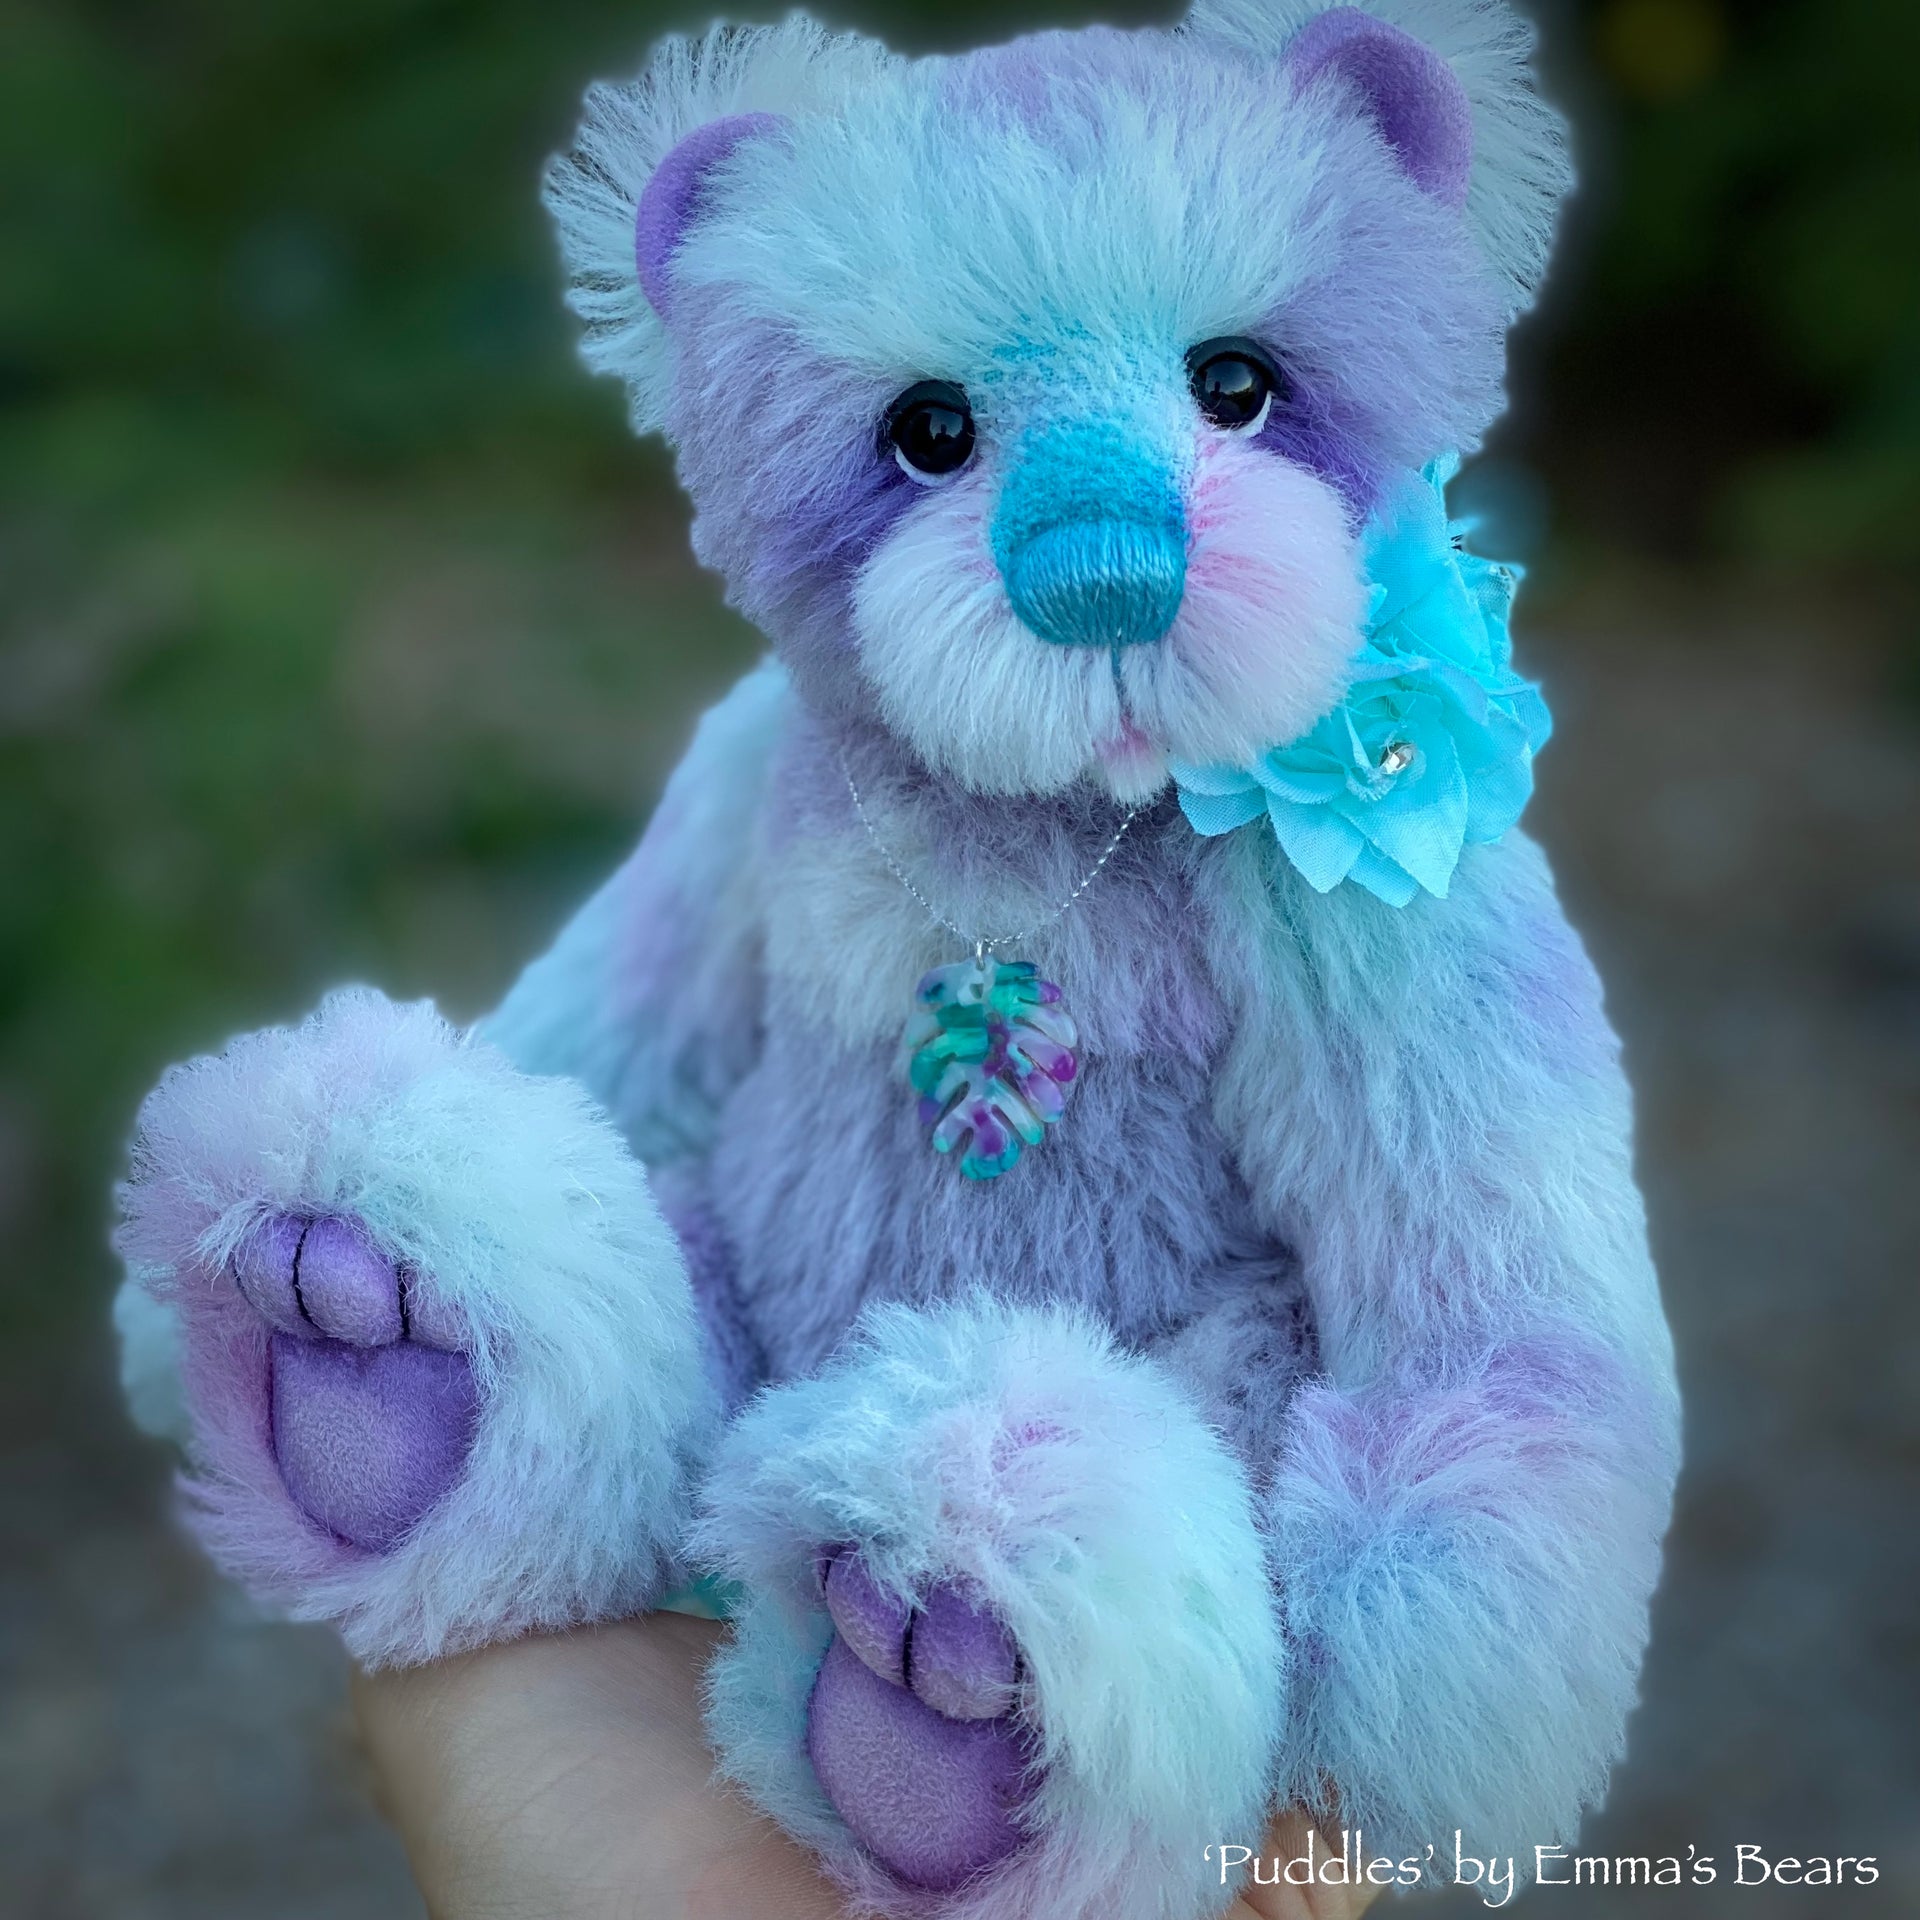 Puddles - 10" Hand-Dyed alpaca artist bear by Emma's Bears - OOAK